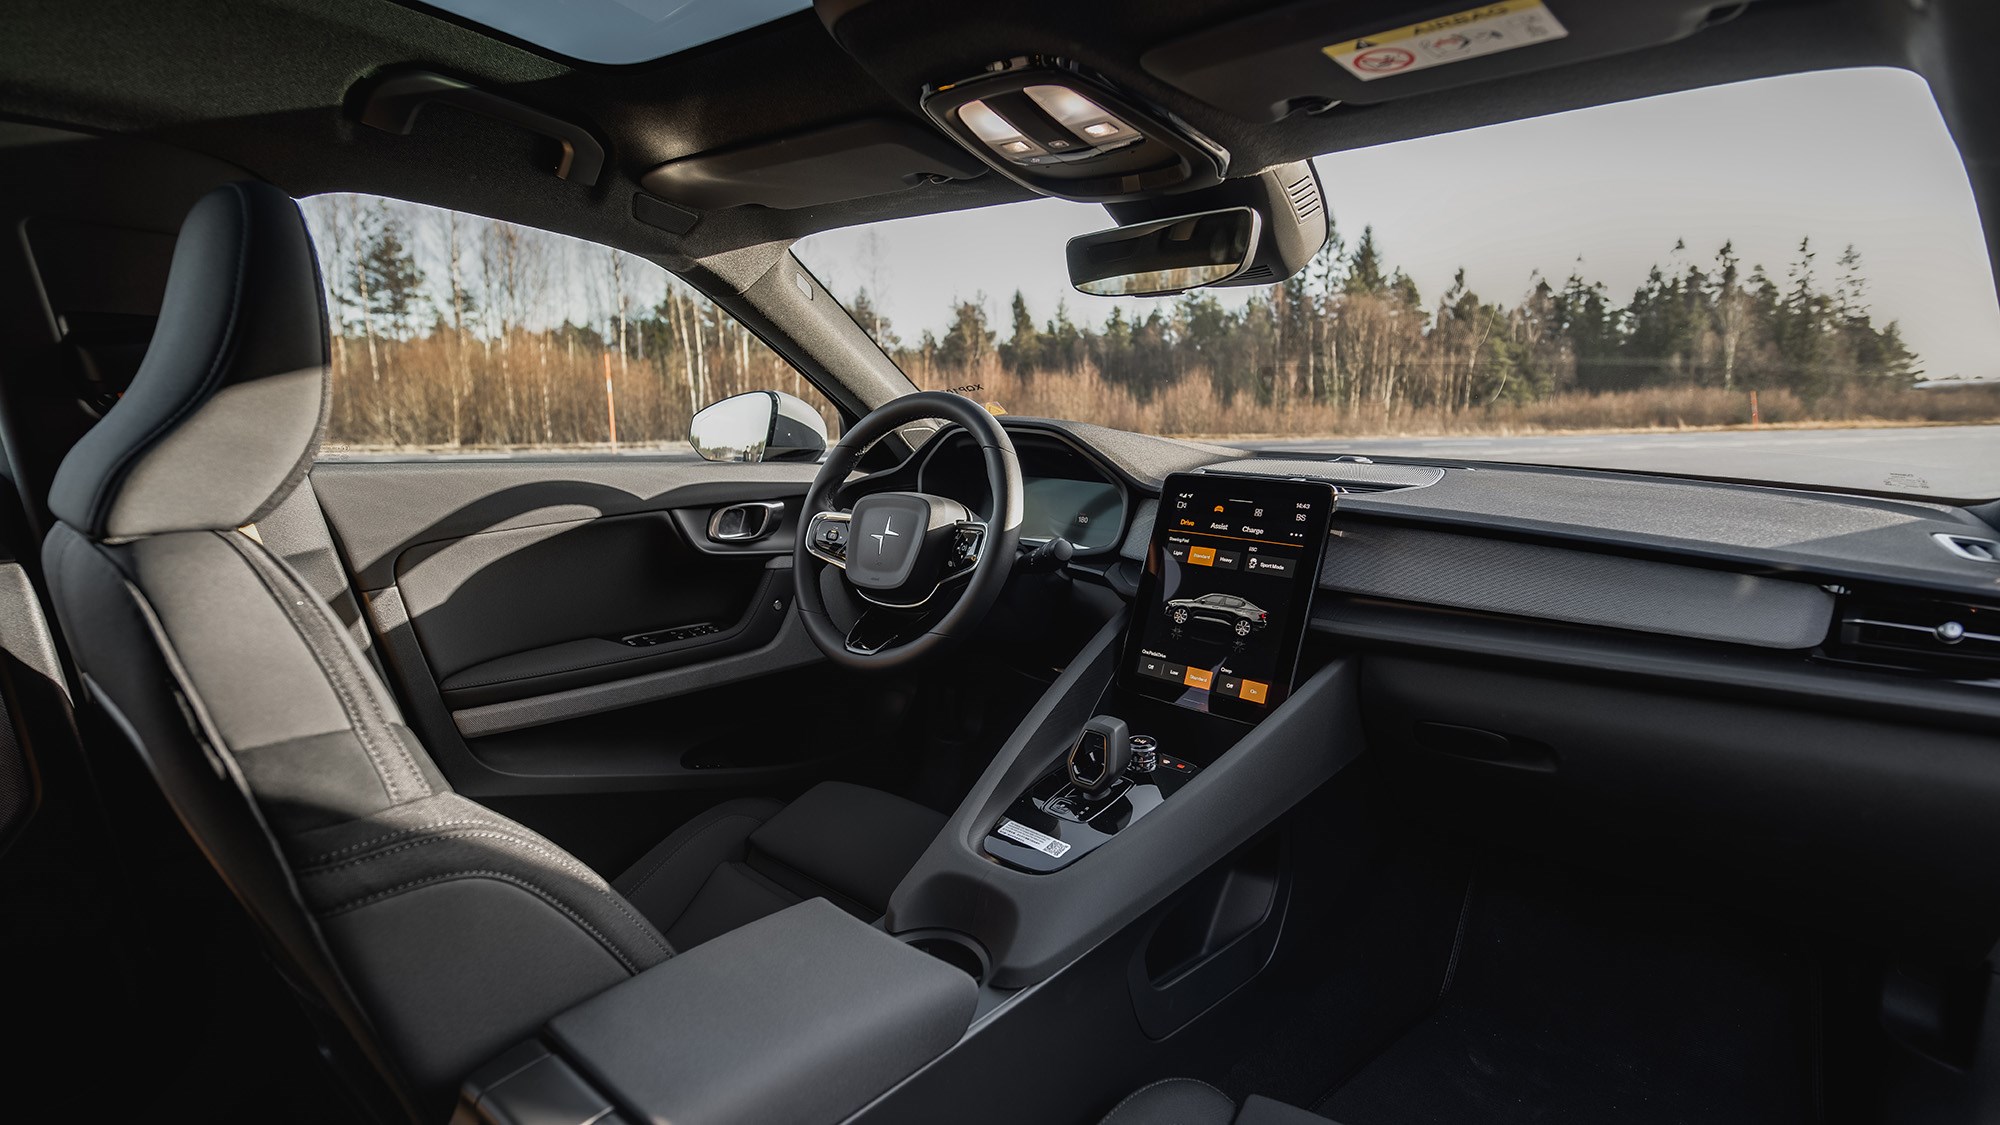 Polestar 2 electric car review: we drive the Tesla Model 3 ...